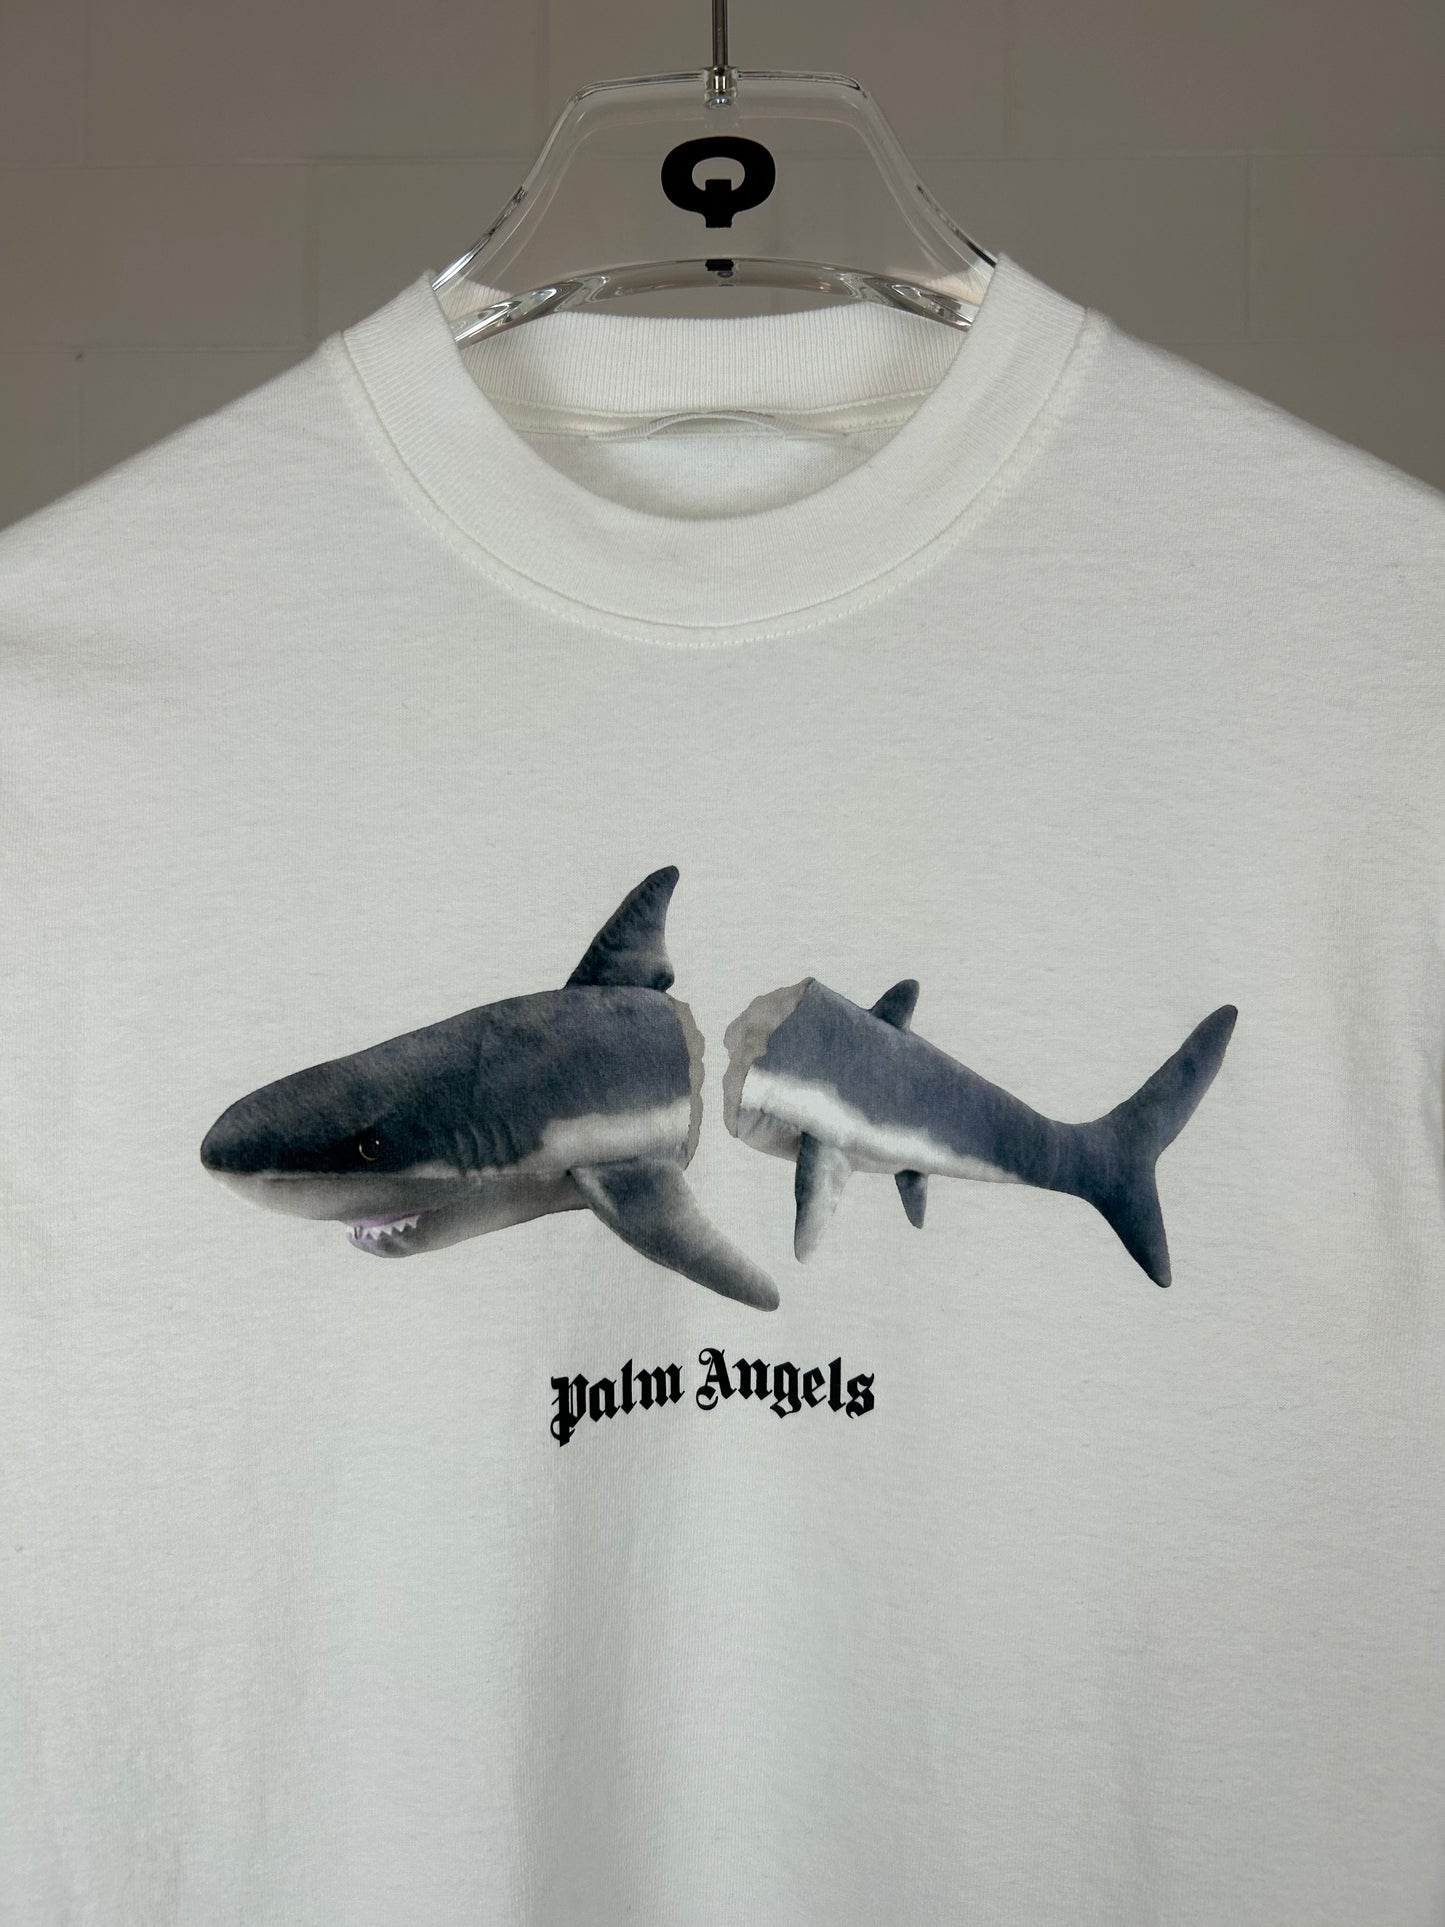 Shark Long Sleeves T-shirt